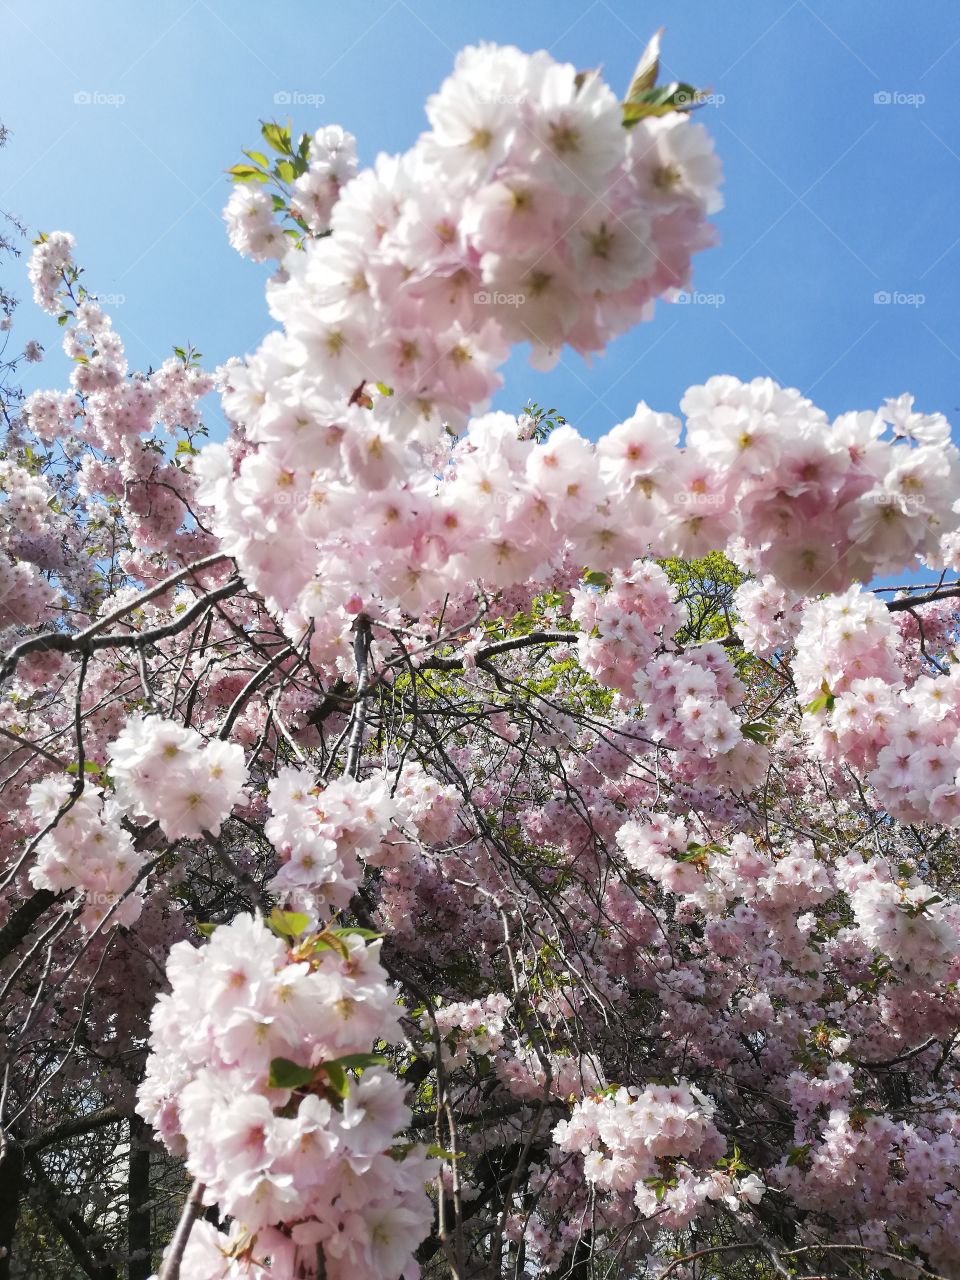 Wonderful cherry blossom in Sweden